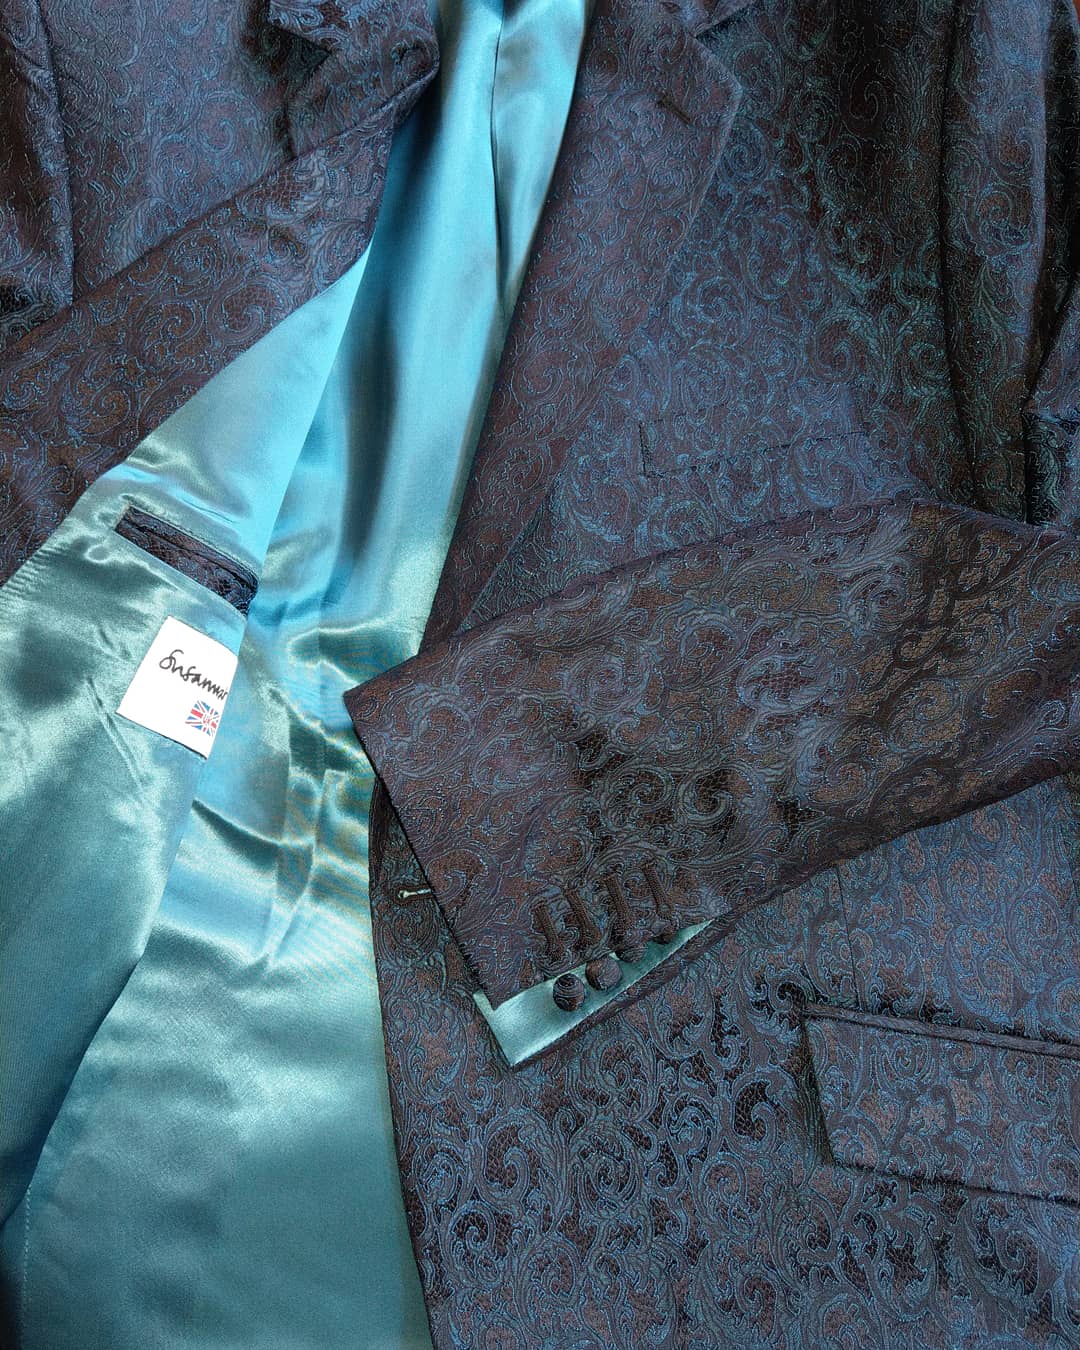 holland-sherry-jaquard-evening-wear-bespoke-susannah-hall-jacket-suit-made-uk-britain.jpg